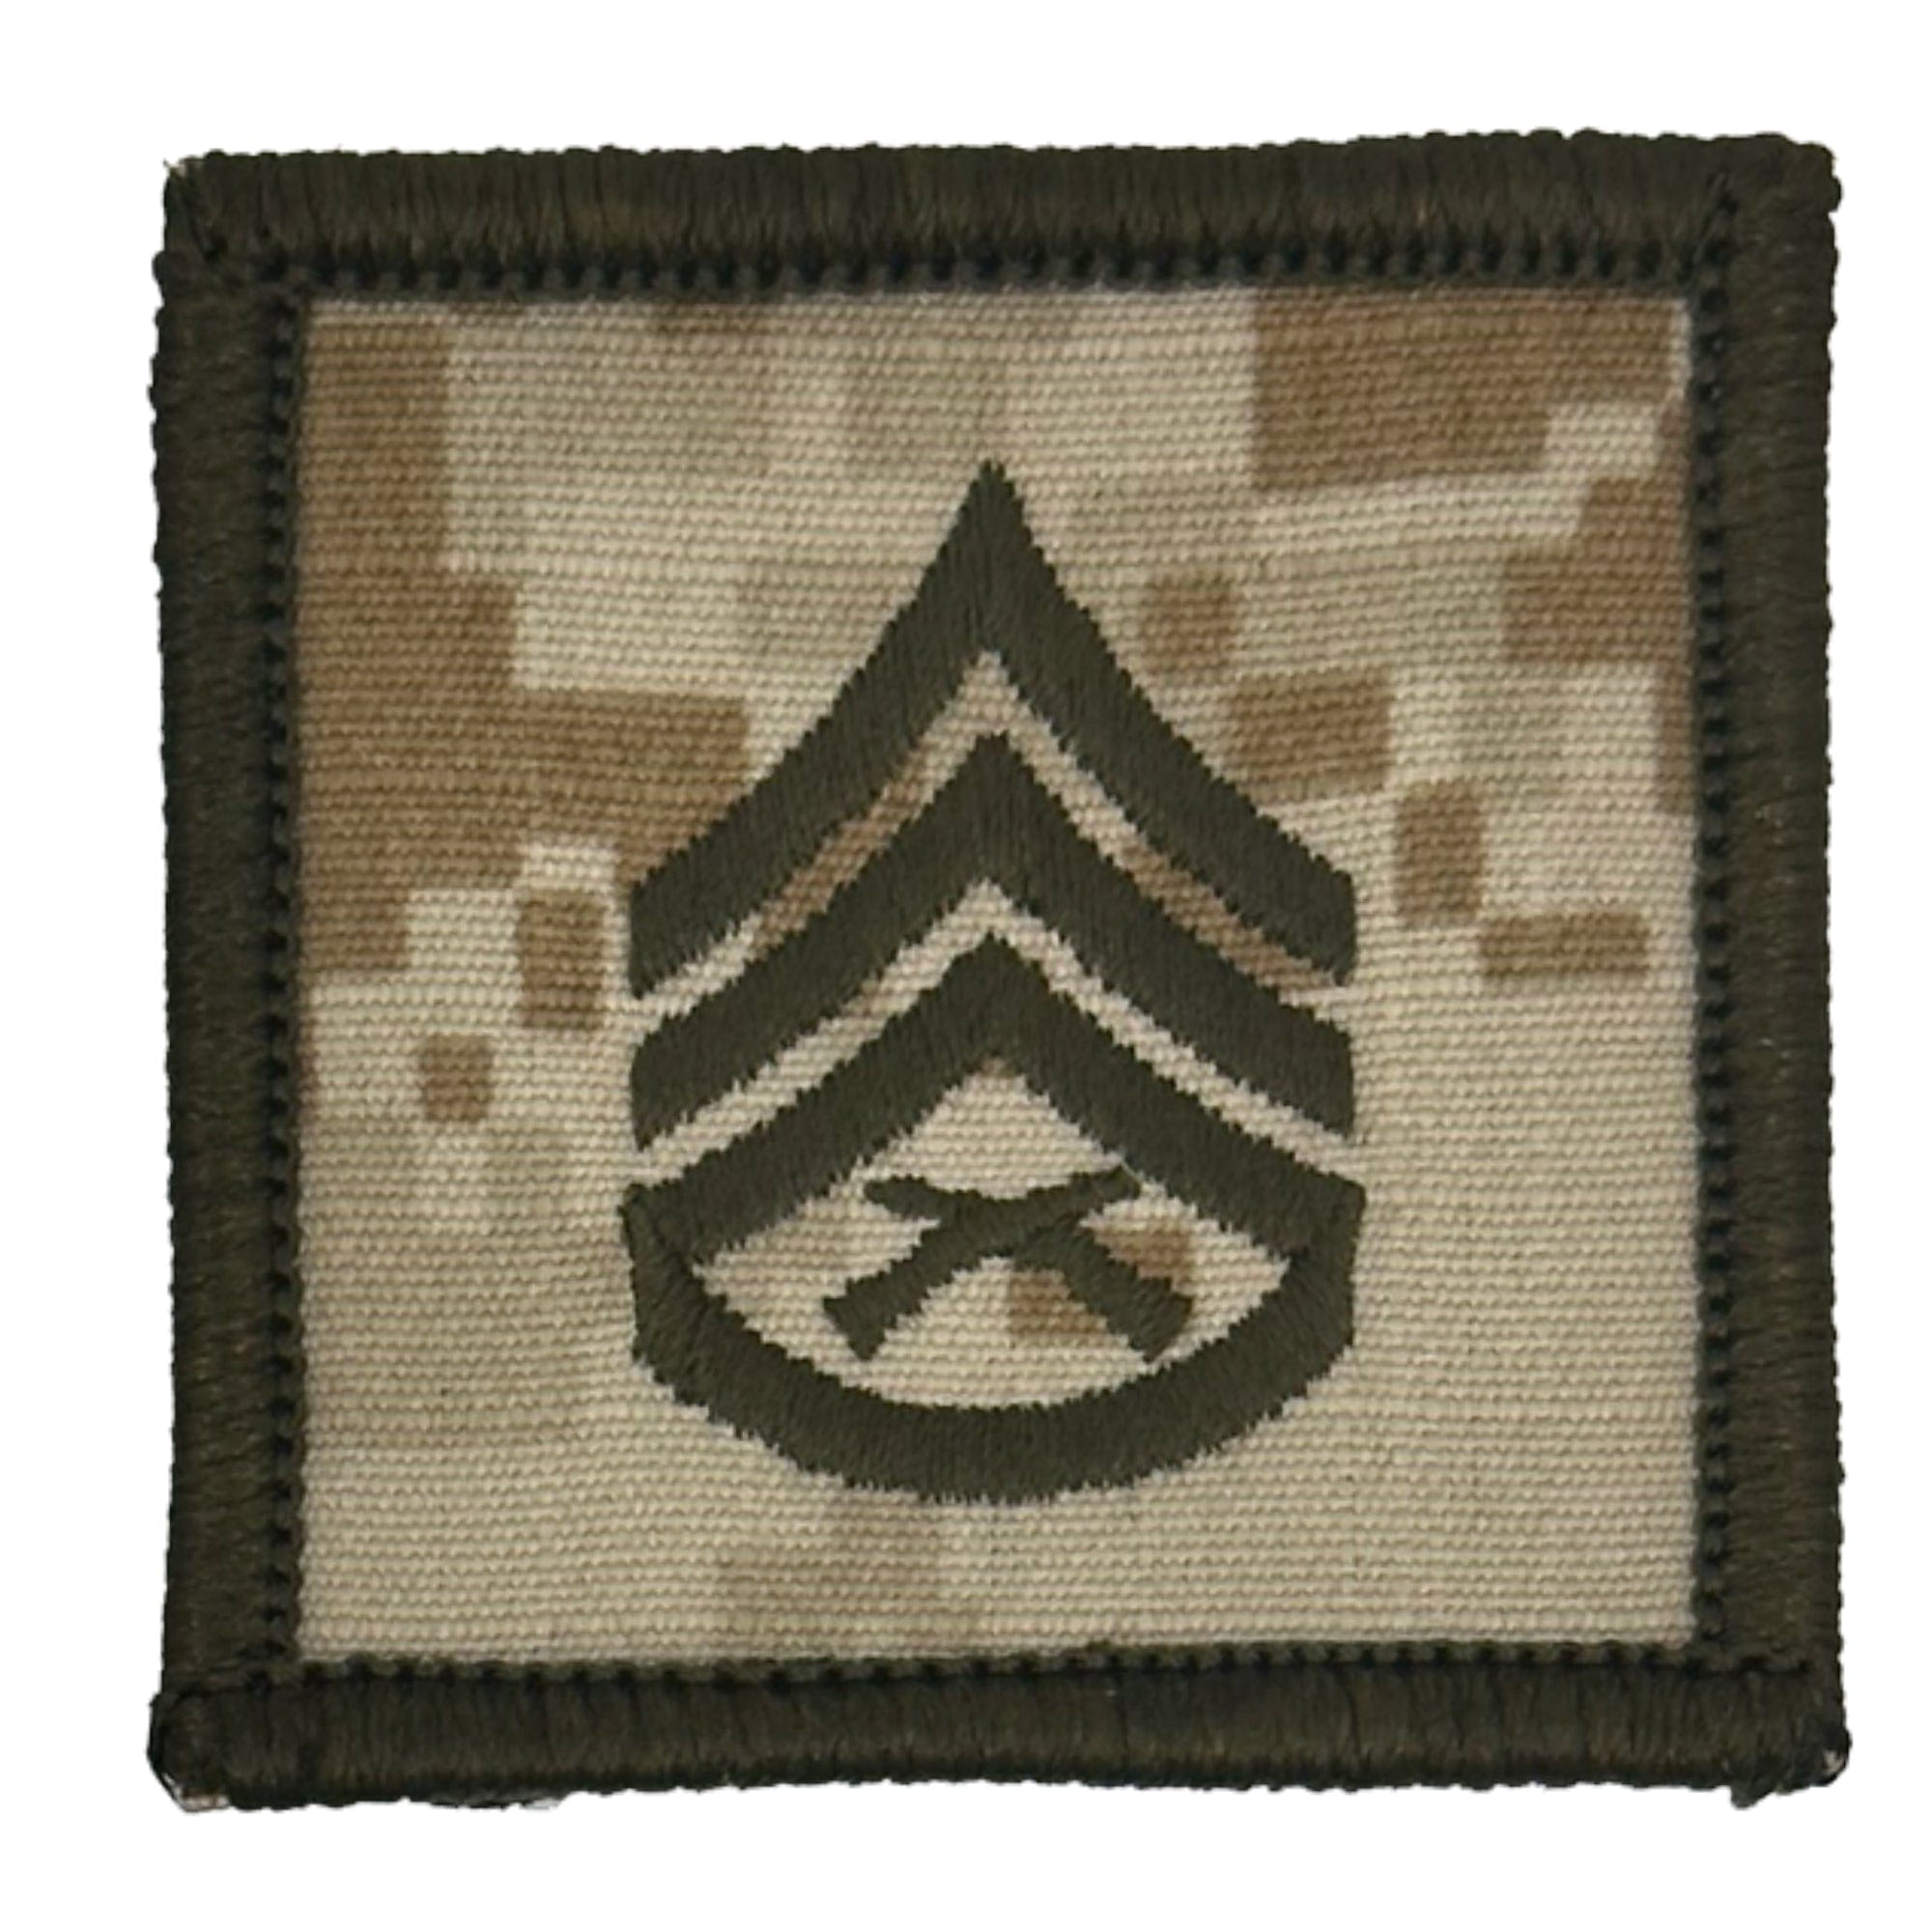 Tactical Gear Junkie Patches MARPAT Desert / Staff Sergeant USMC Rank Insignia - 2x2 Patch